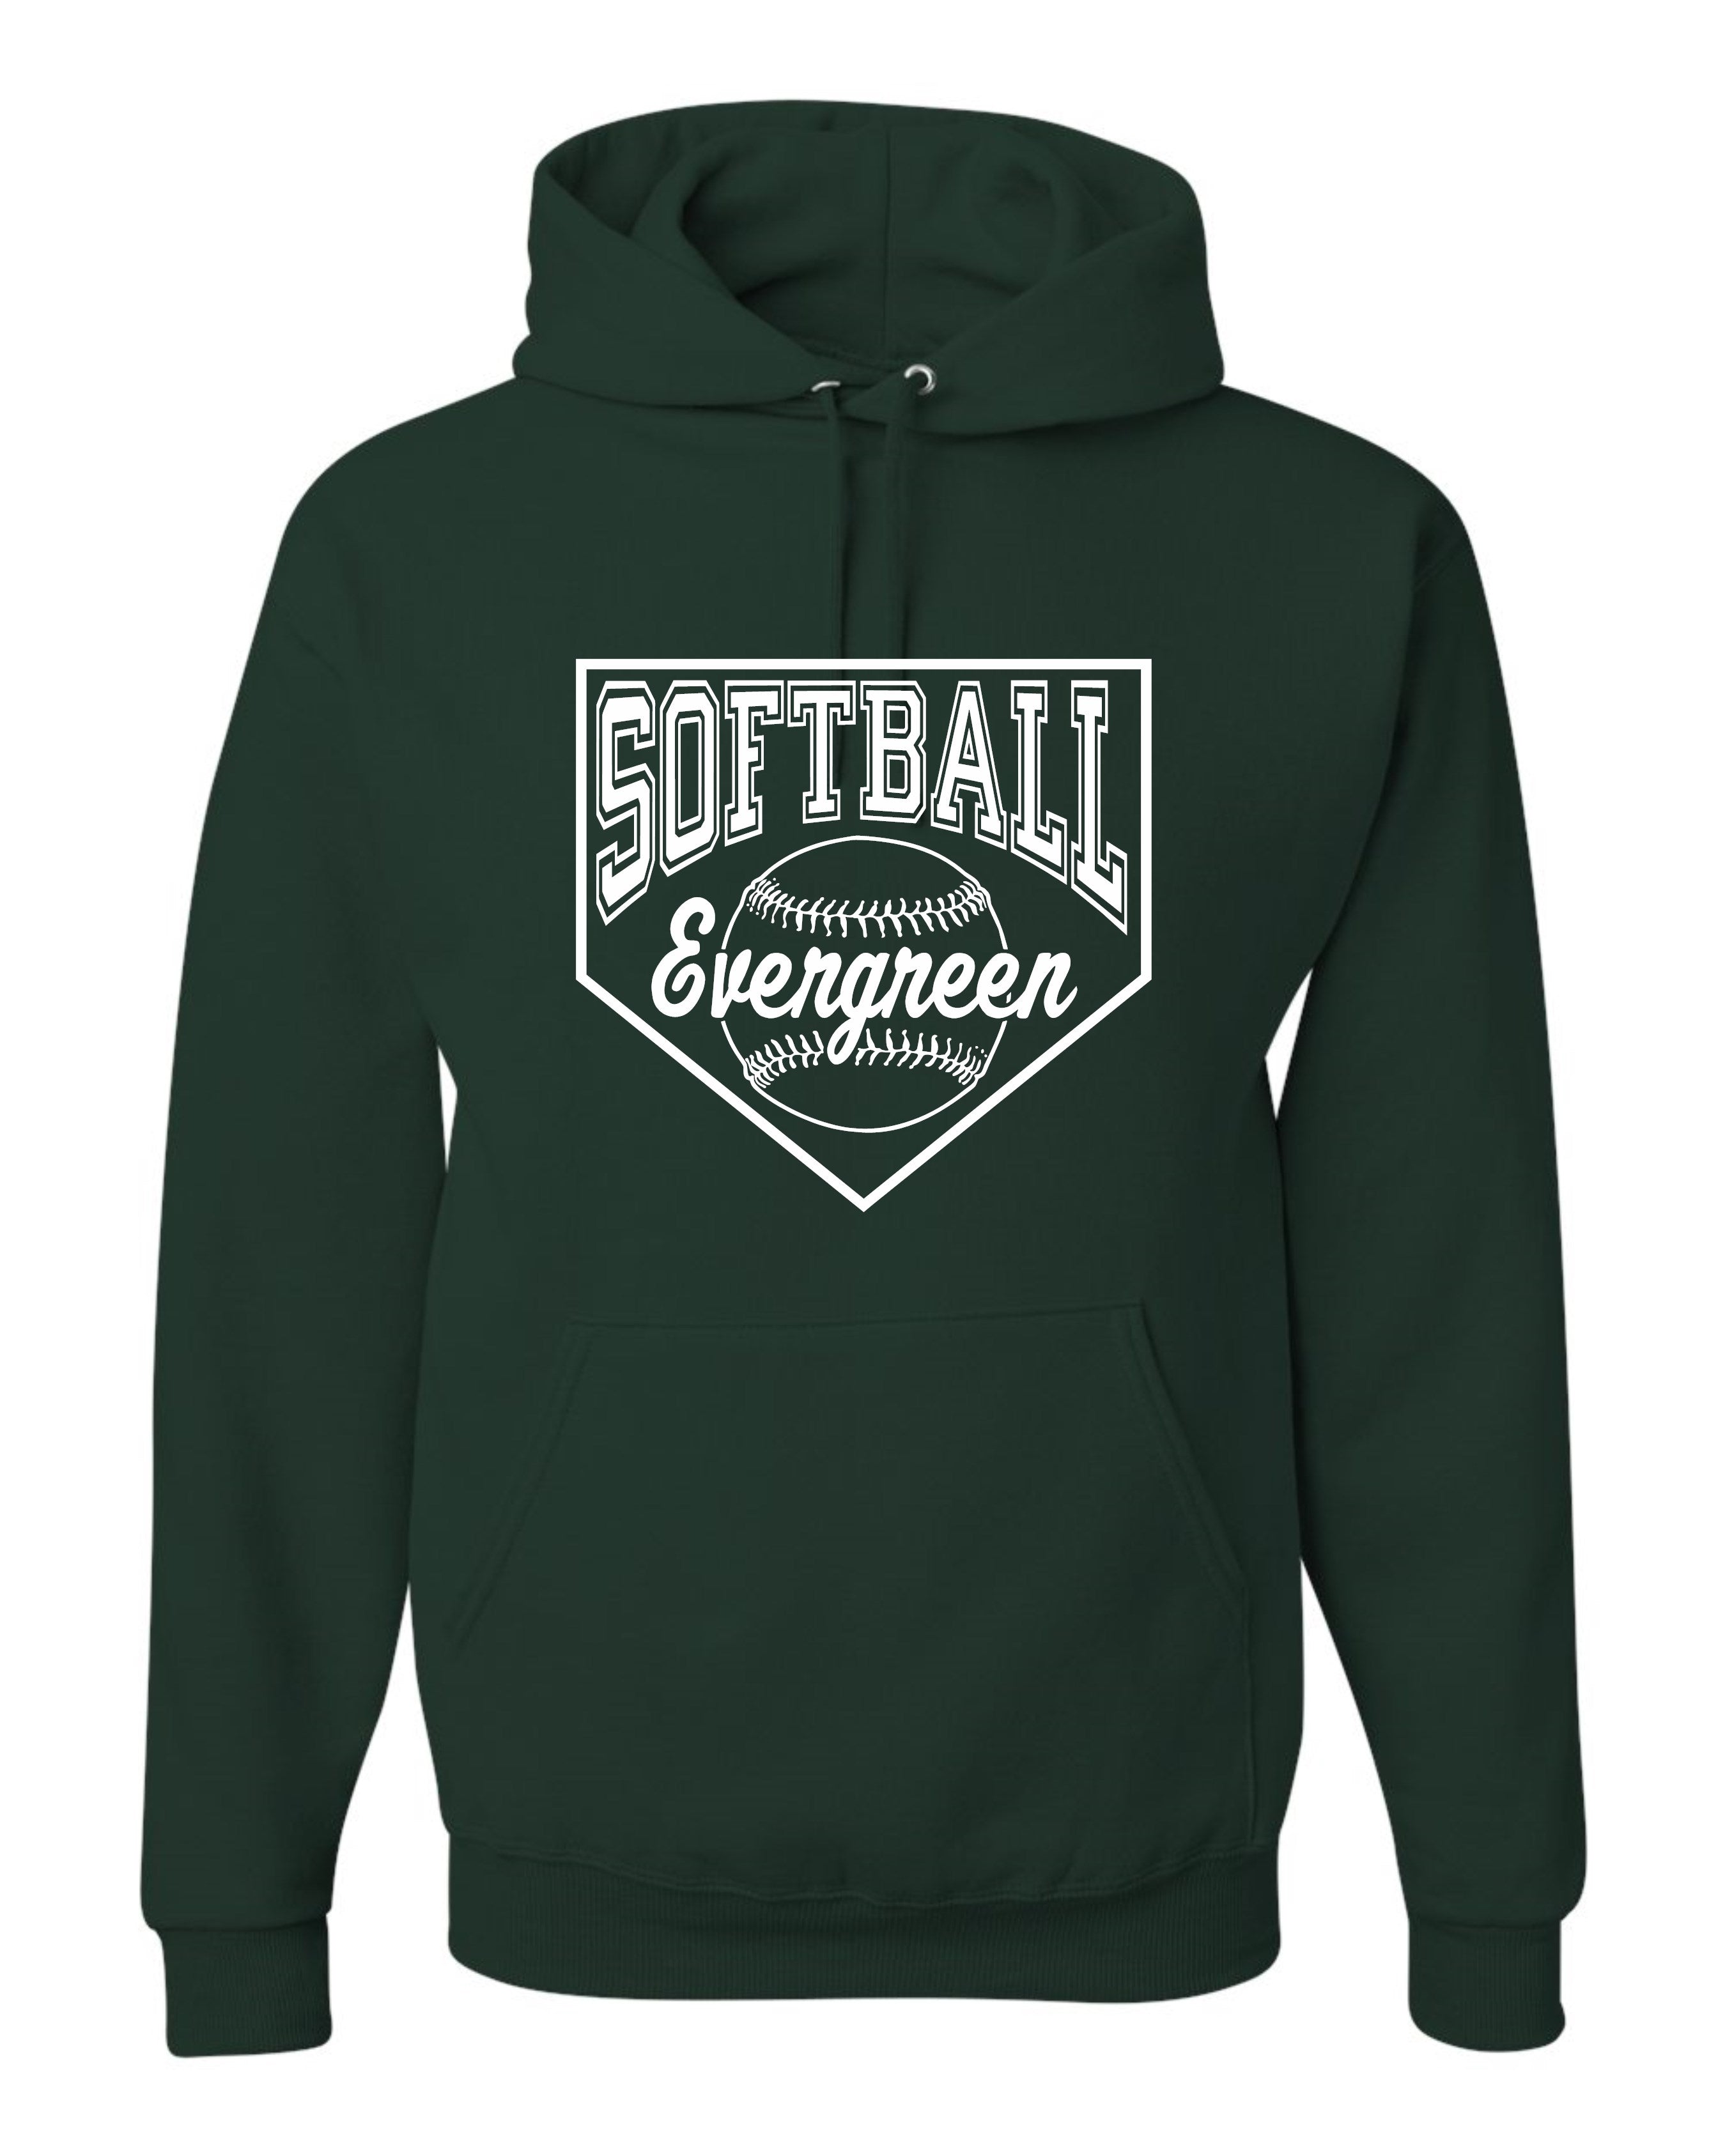 Evergreen Softball